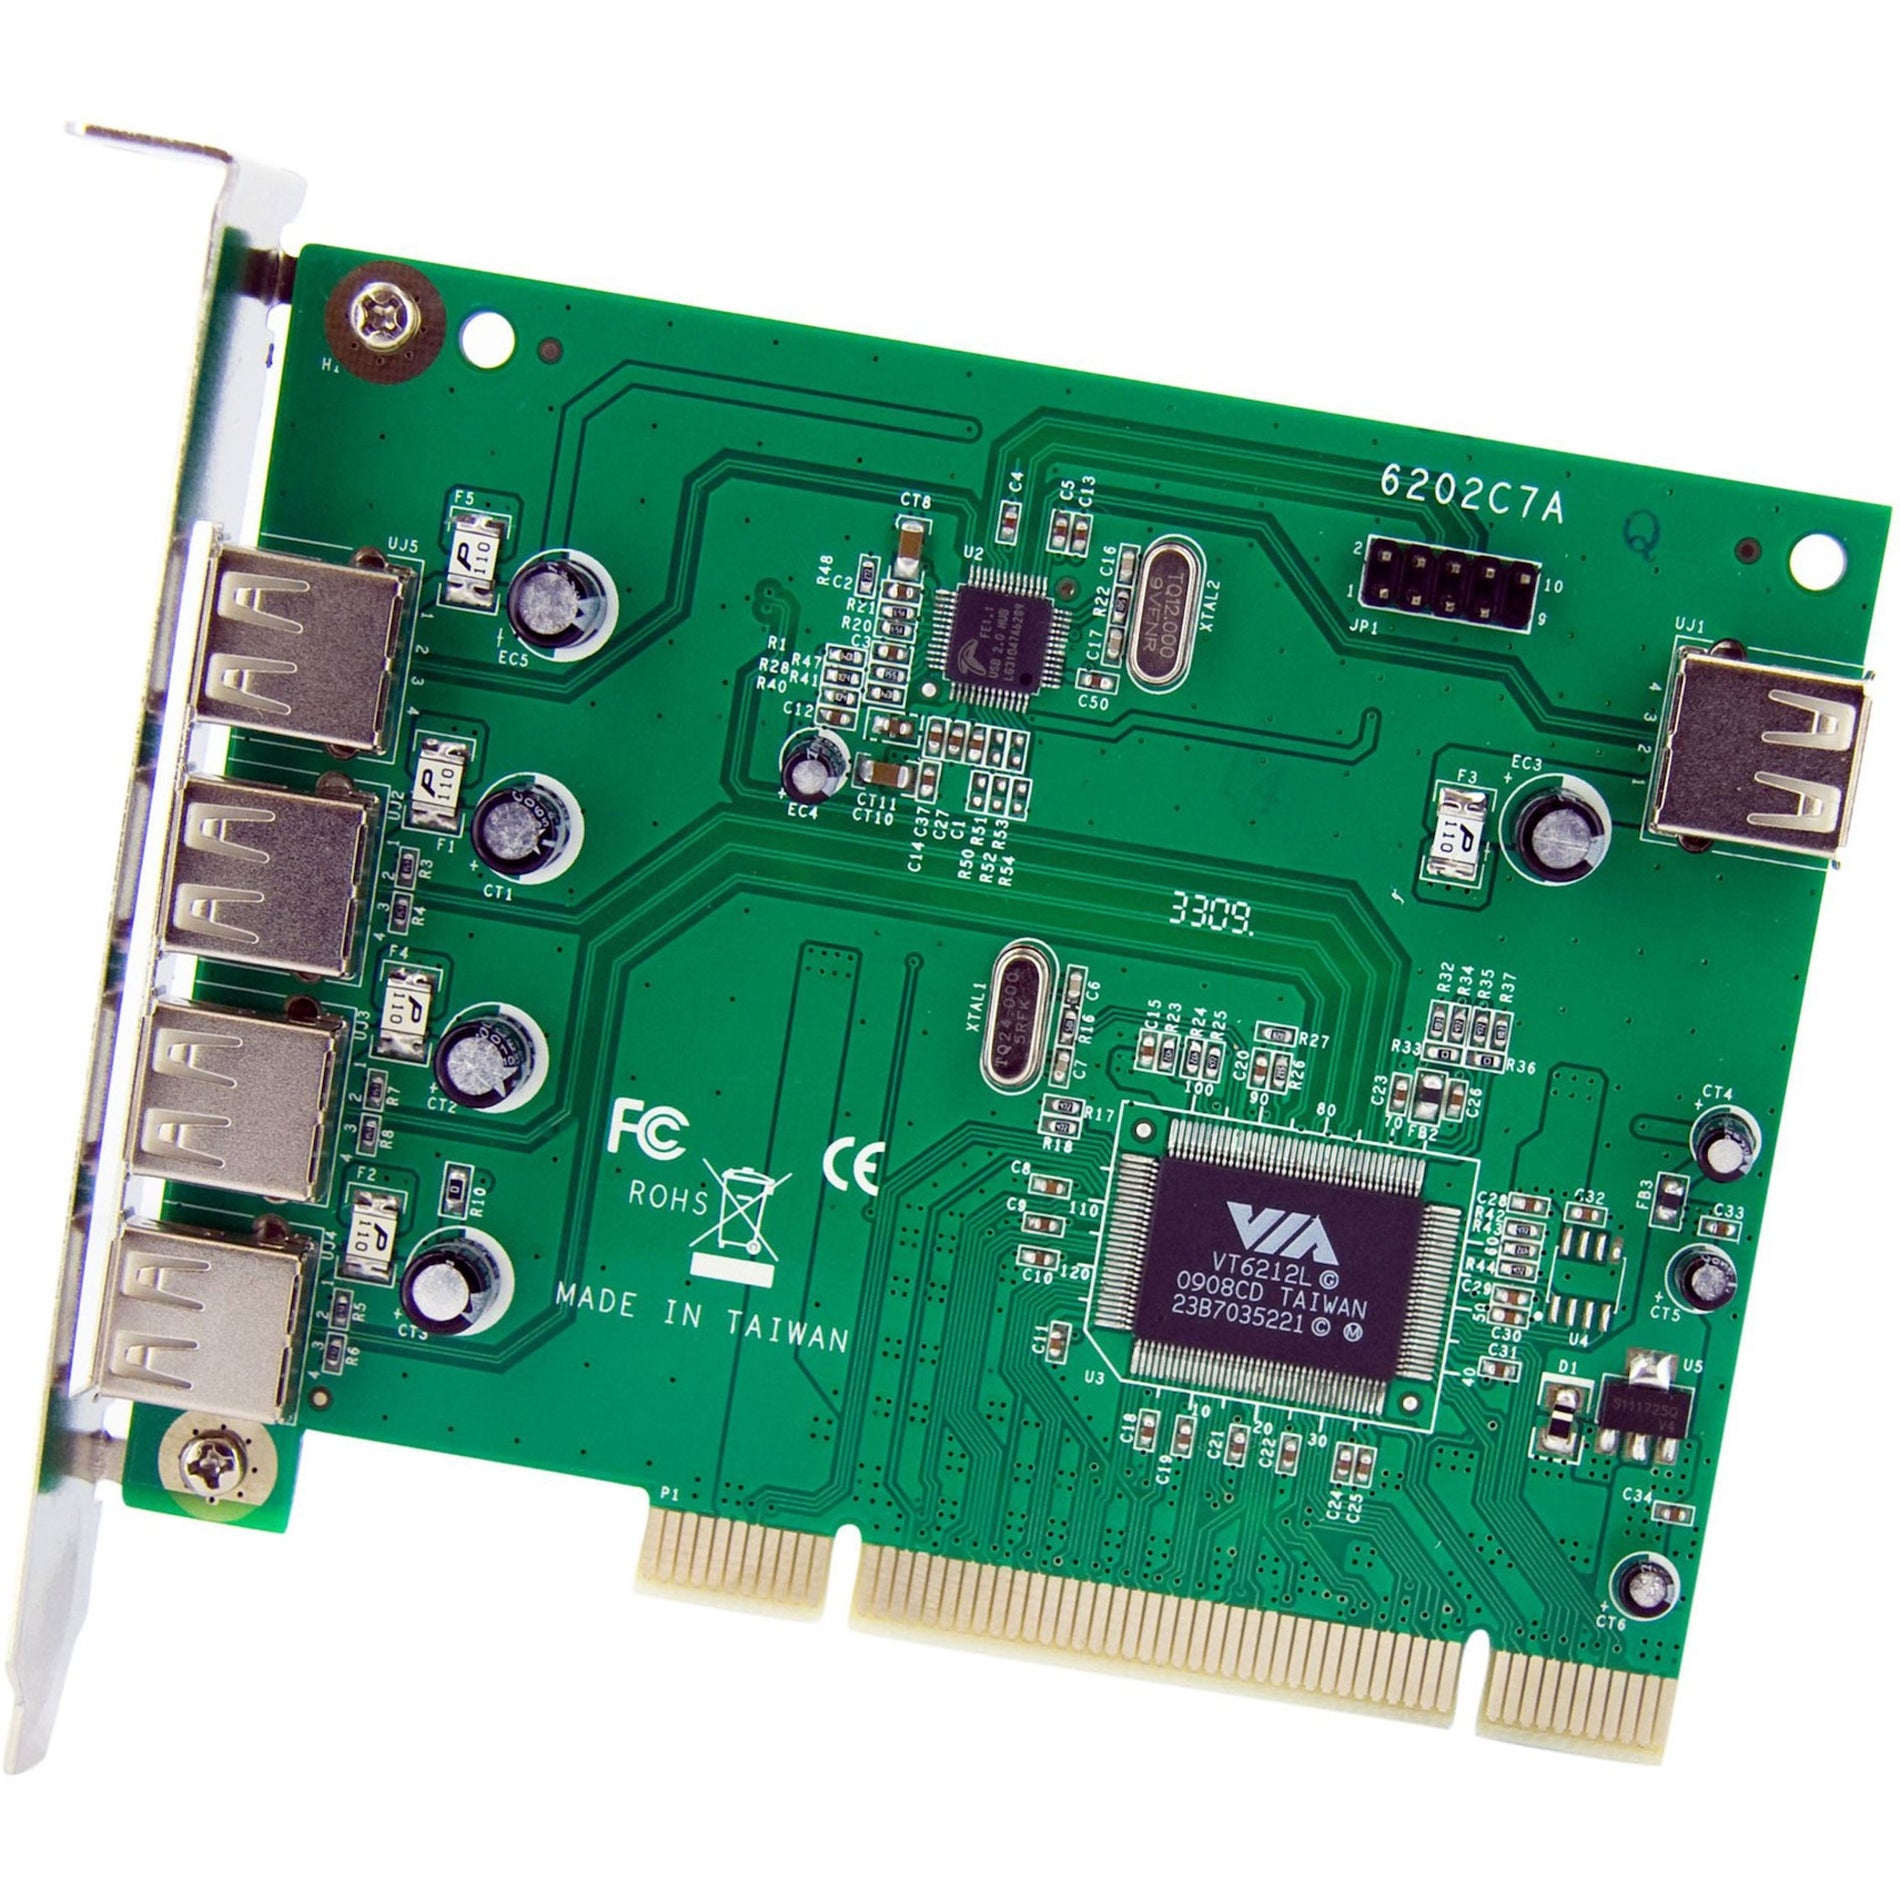 StarTech.com PCIUSB7 7 Port PCI USB 2.0 Adapter Card, Expand Your USB Connectivity